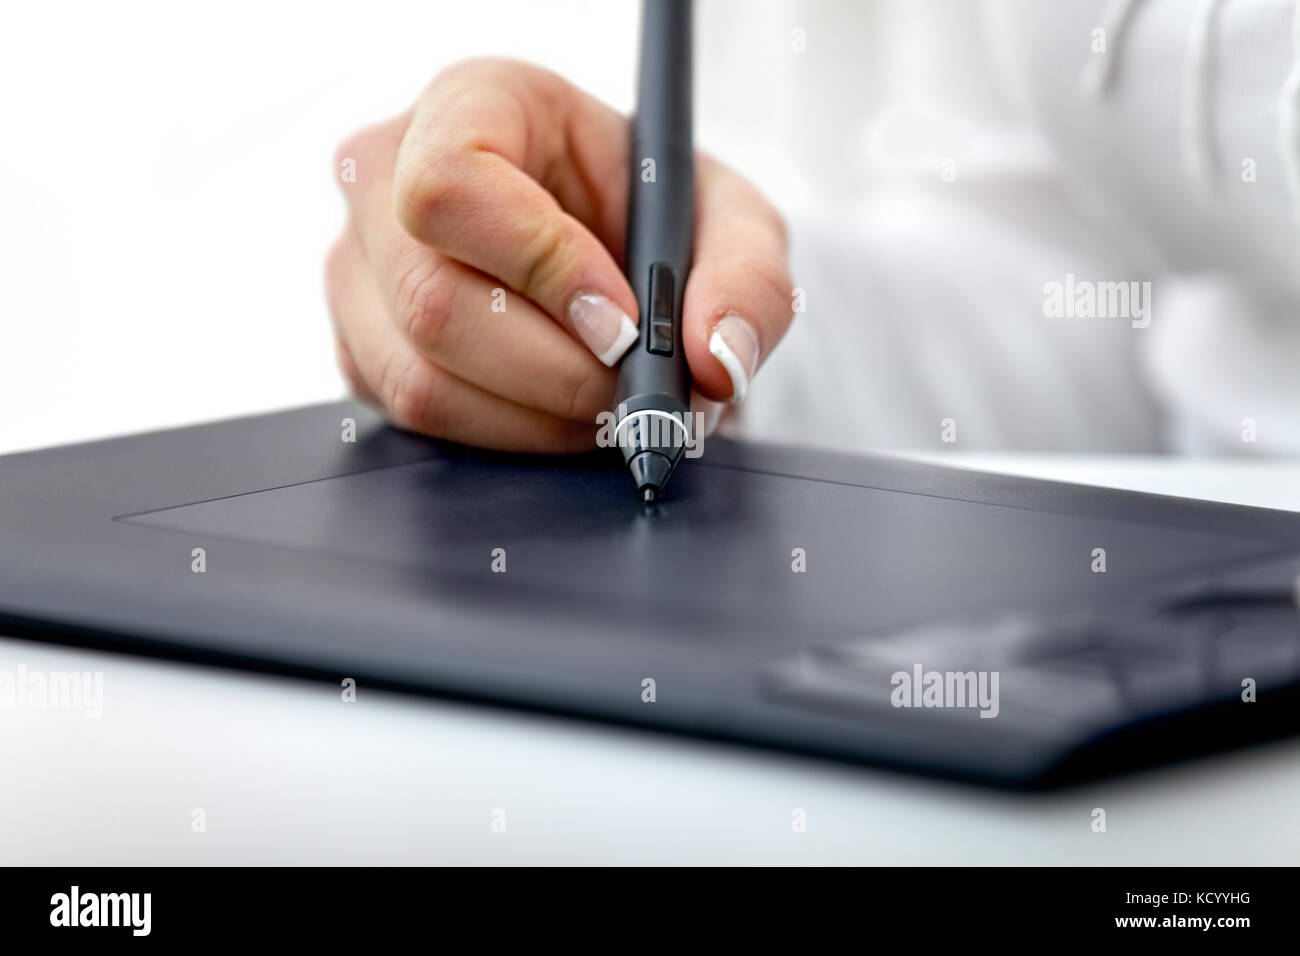 Silver pen tablet and stylus fotografías e imágenes de alta resolución -  Alamy